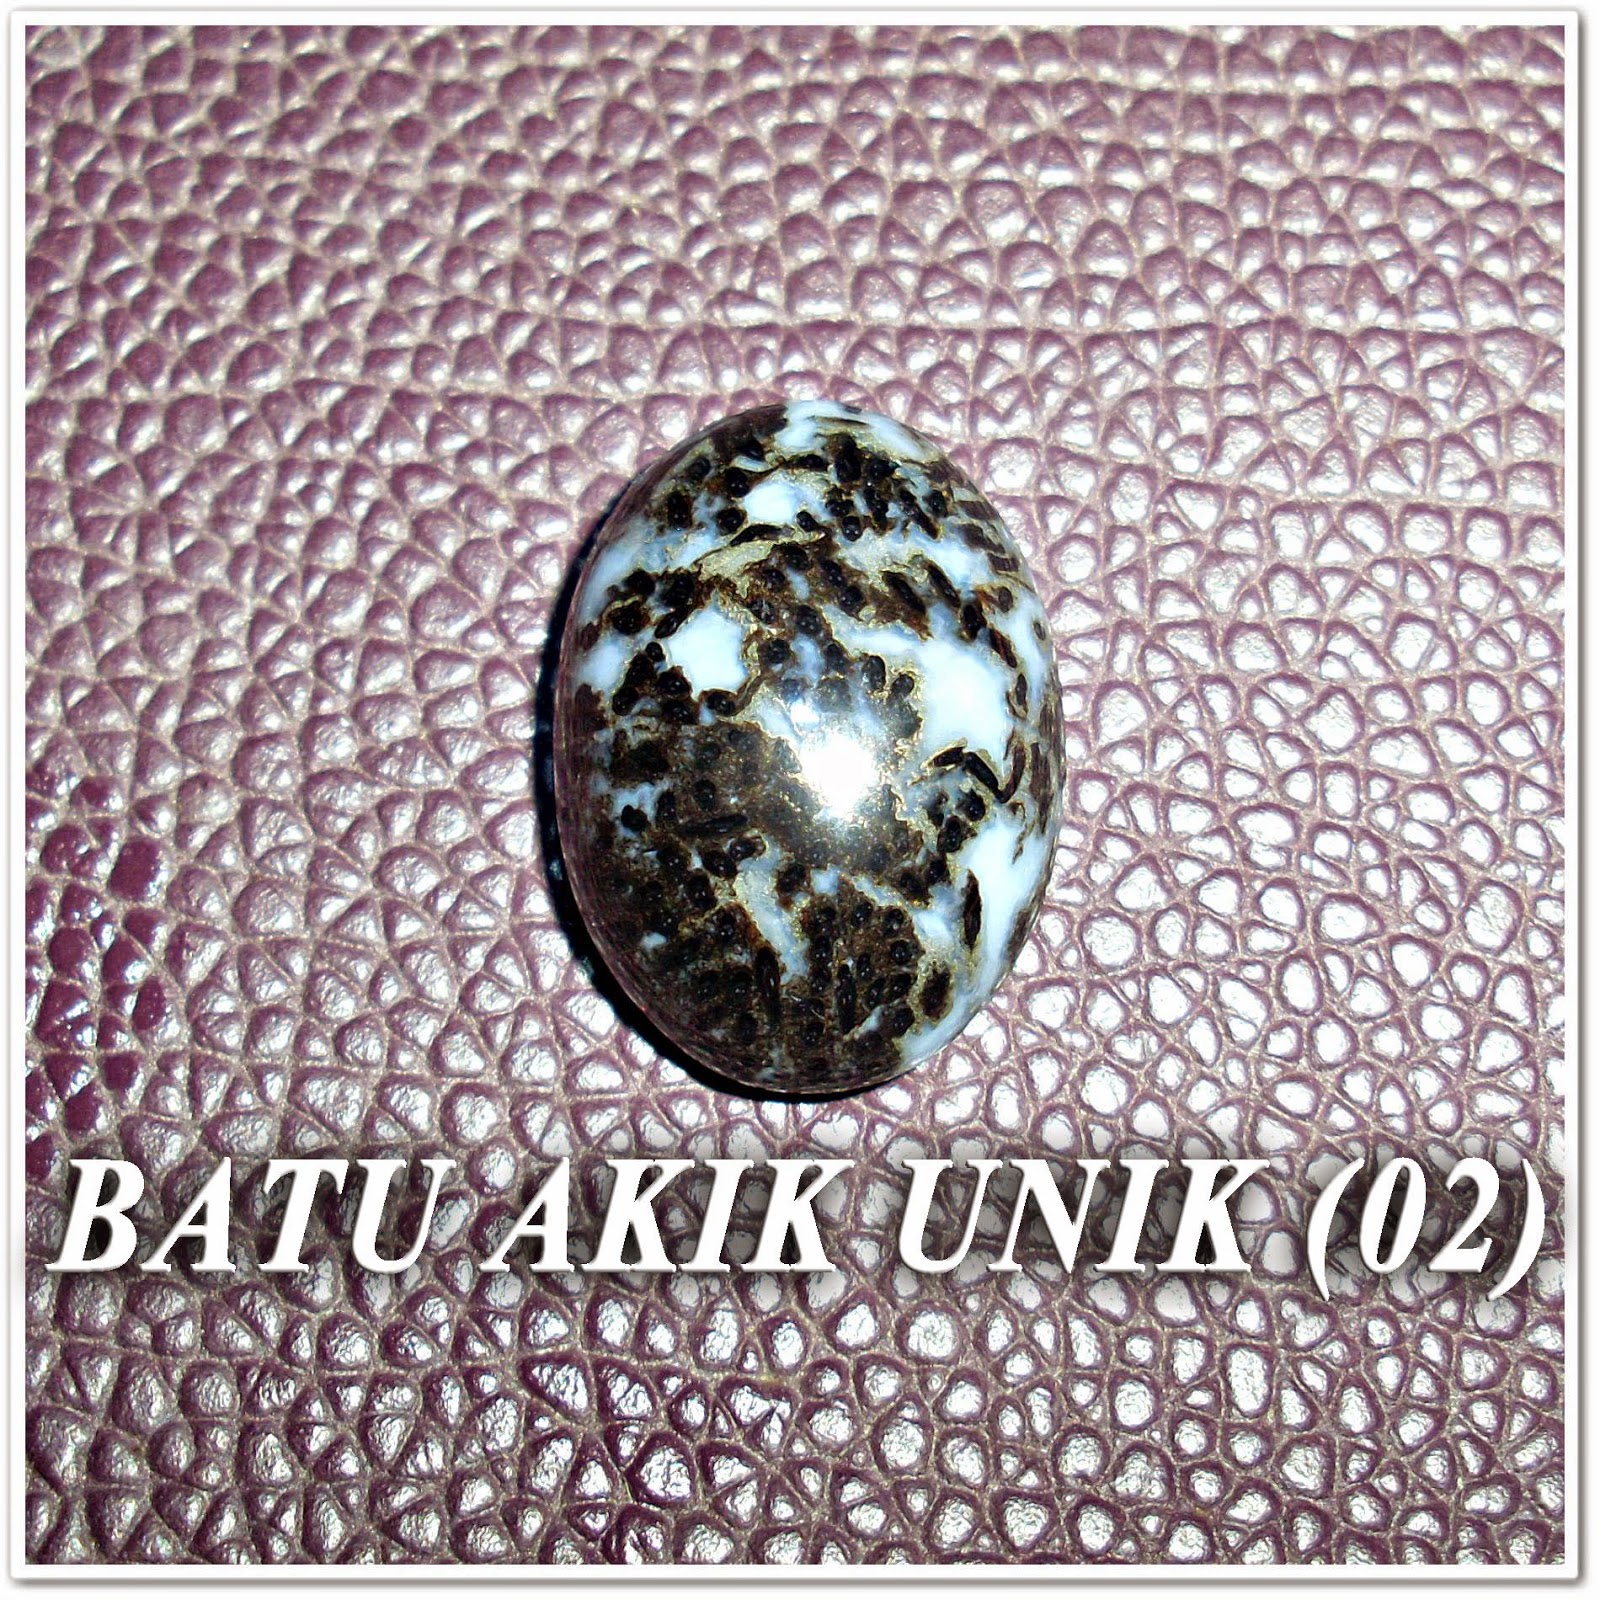 http://batuakik84.blogspot.com/2014/10/batu-akik-unik-02.html